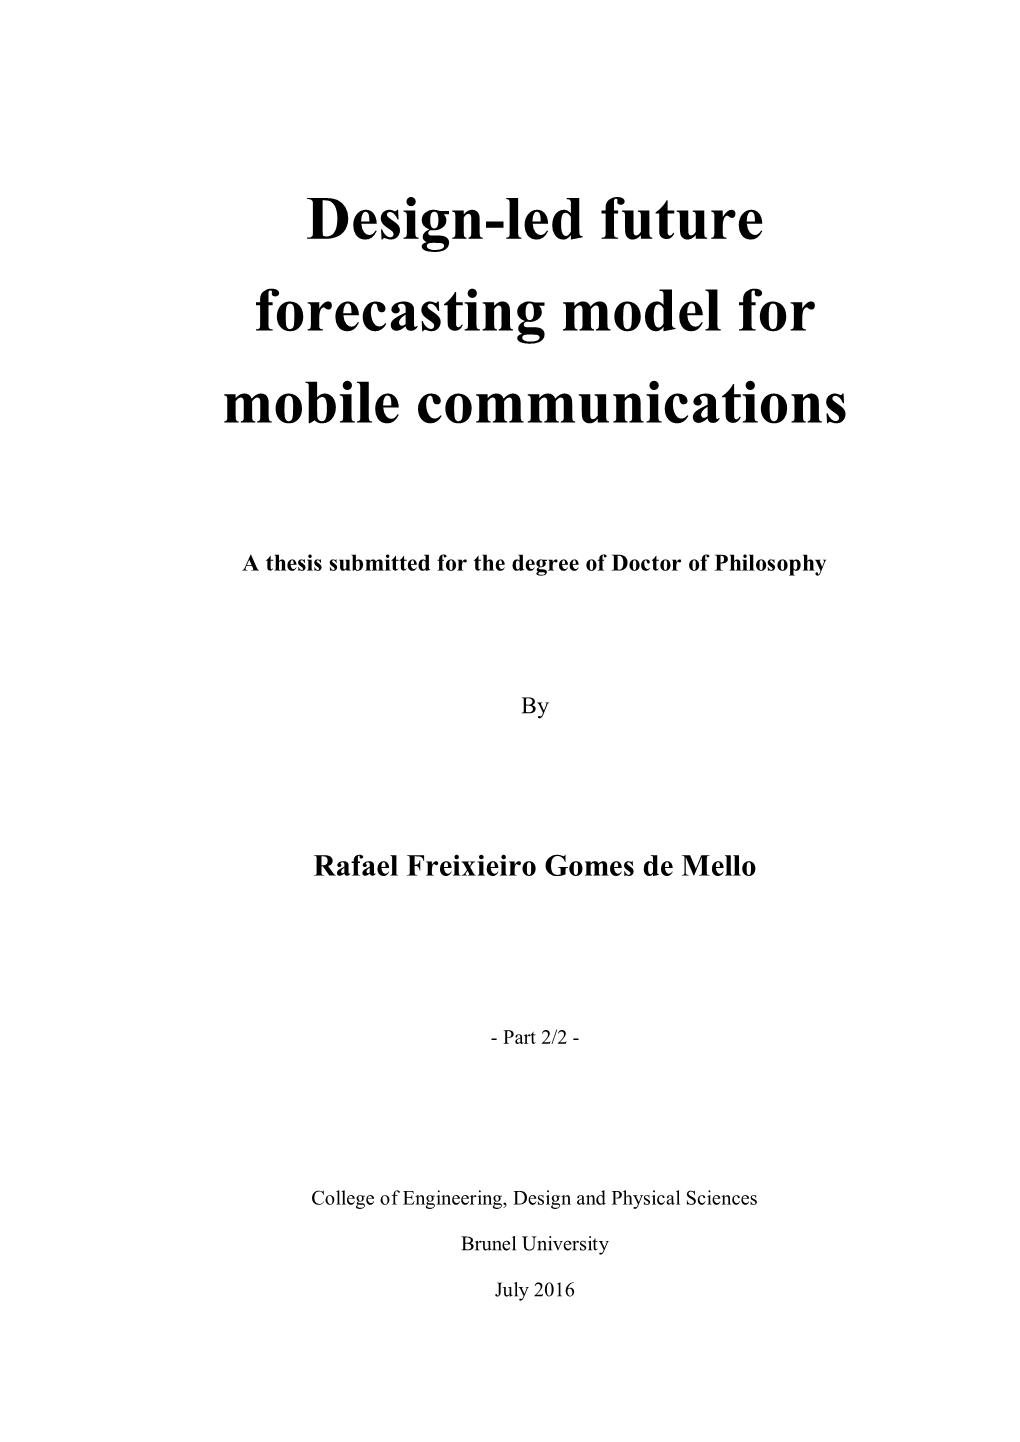 Design-Led Future Forecasting Model for Mobile Communications